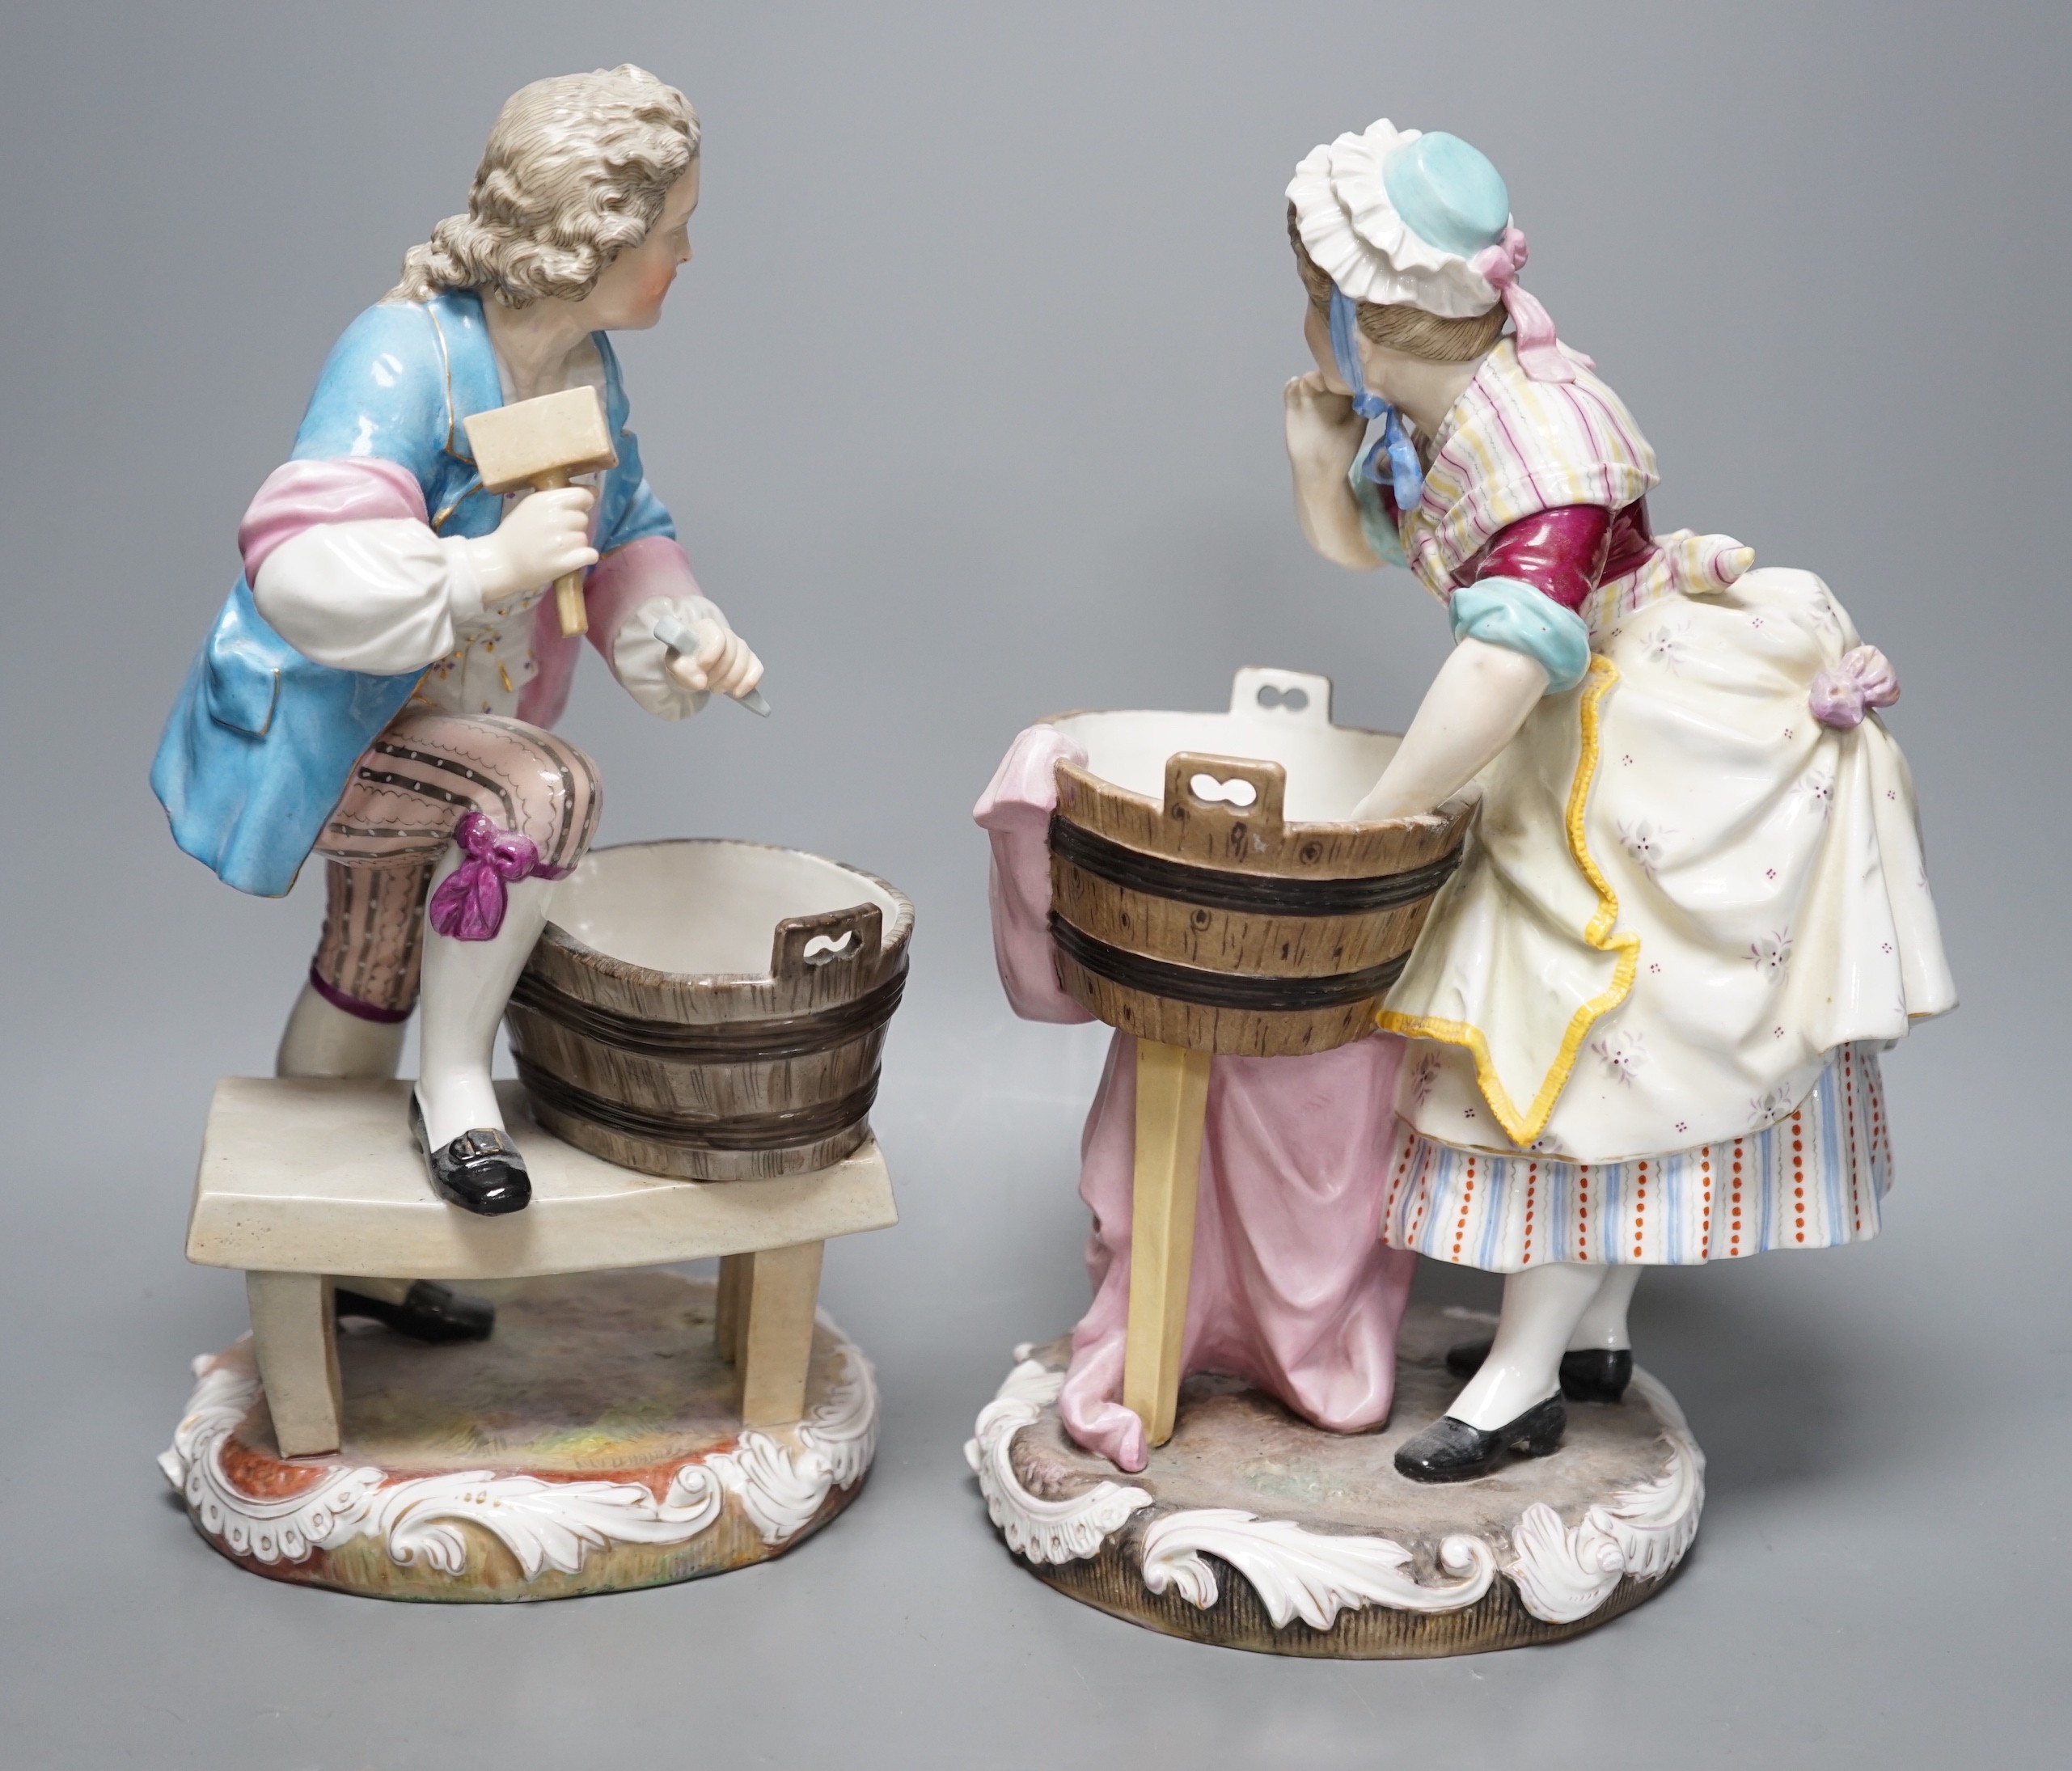 A pair of late 19th century Italian porcelain figures, 31cm